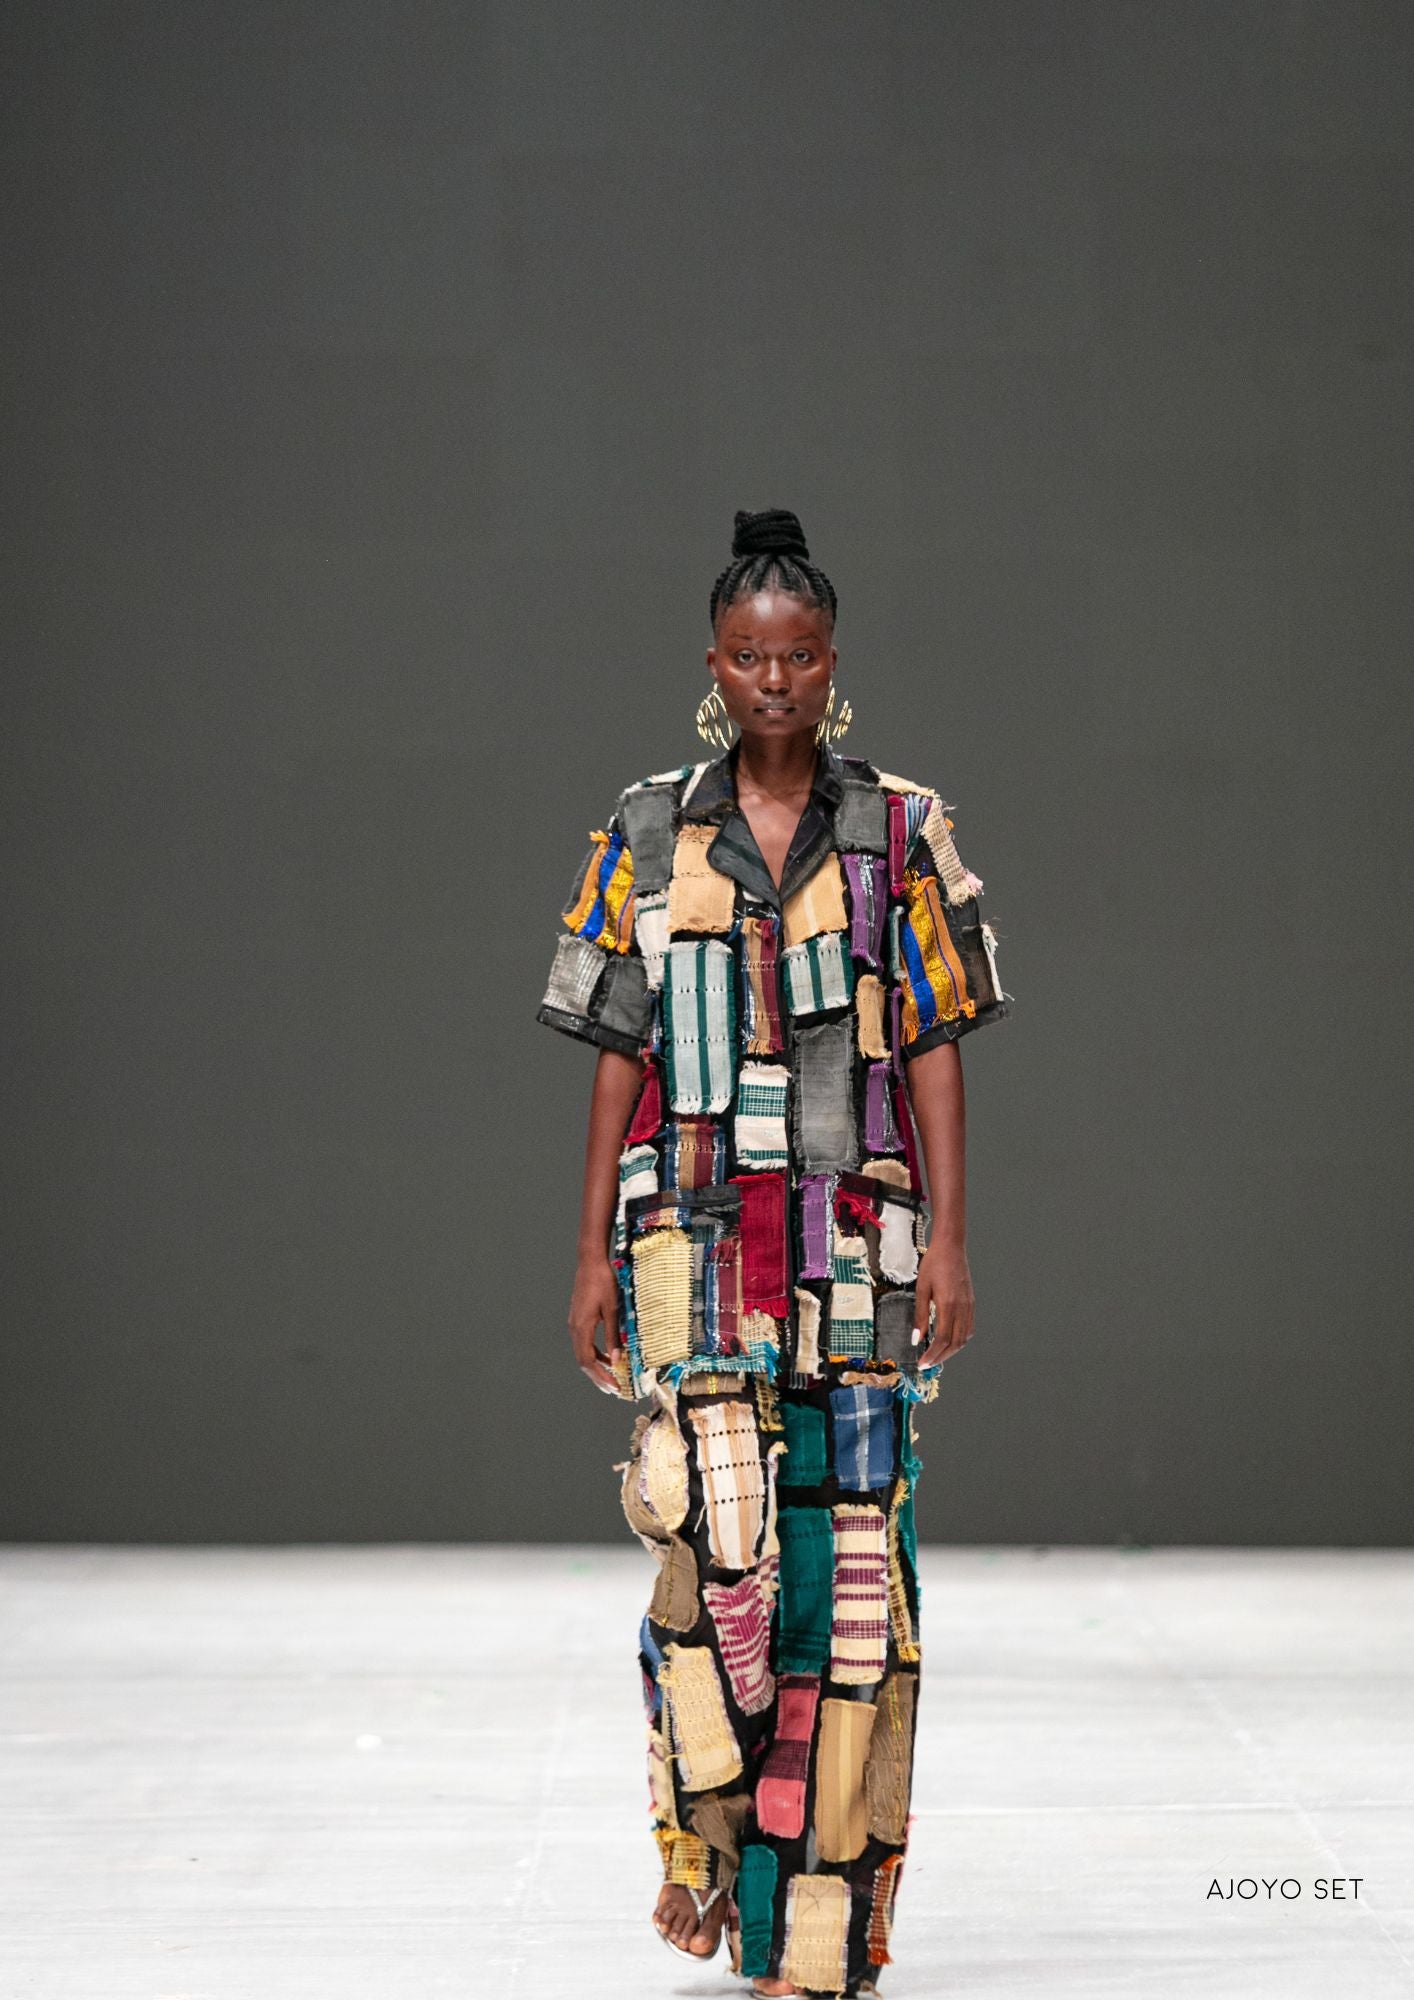 The Yoruba Heritage Is The Through Line Of Michelle Adepoju’s Brand Kíléntár